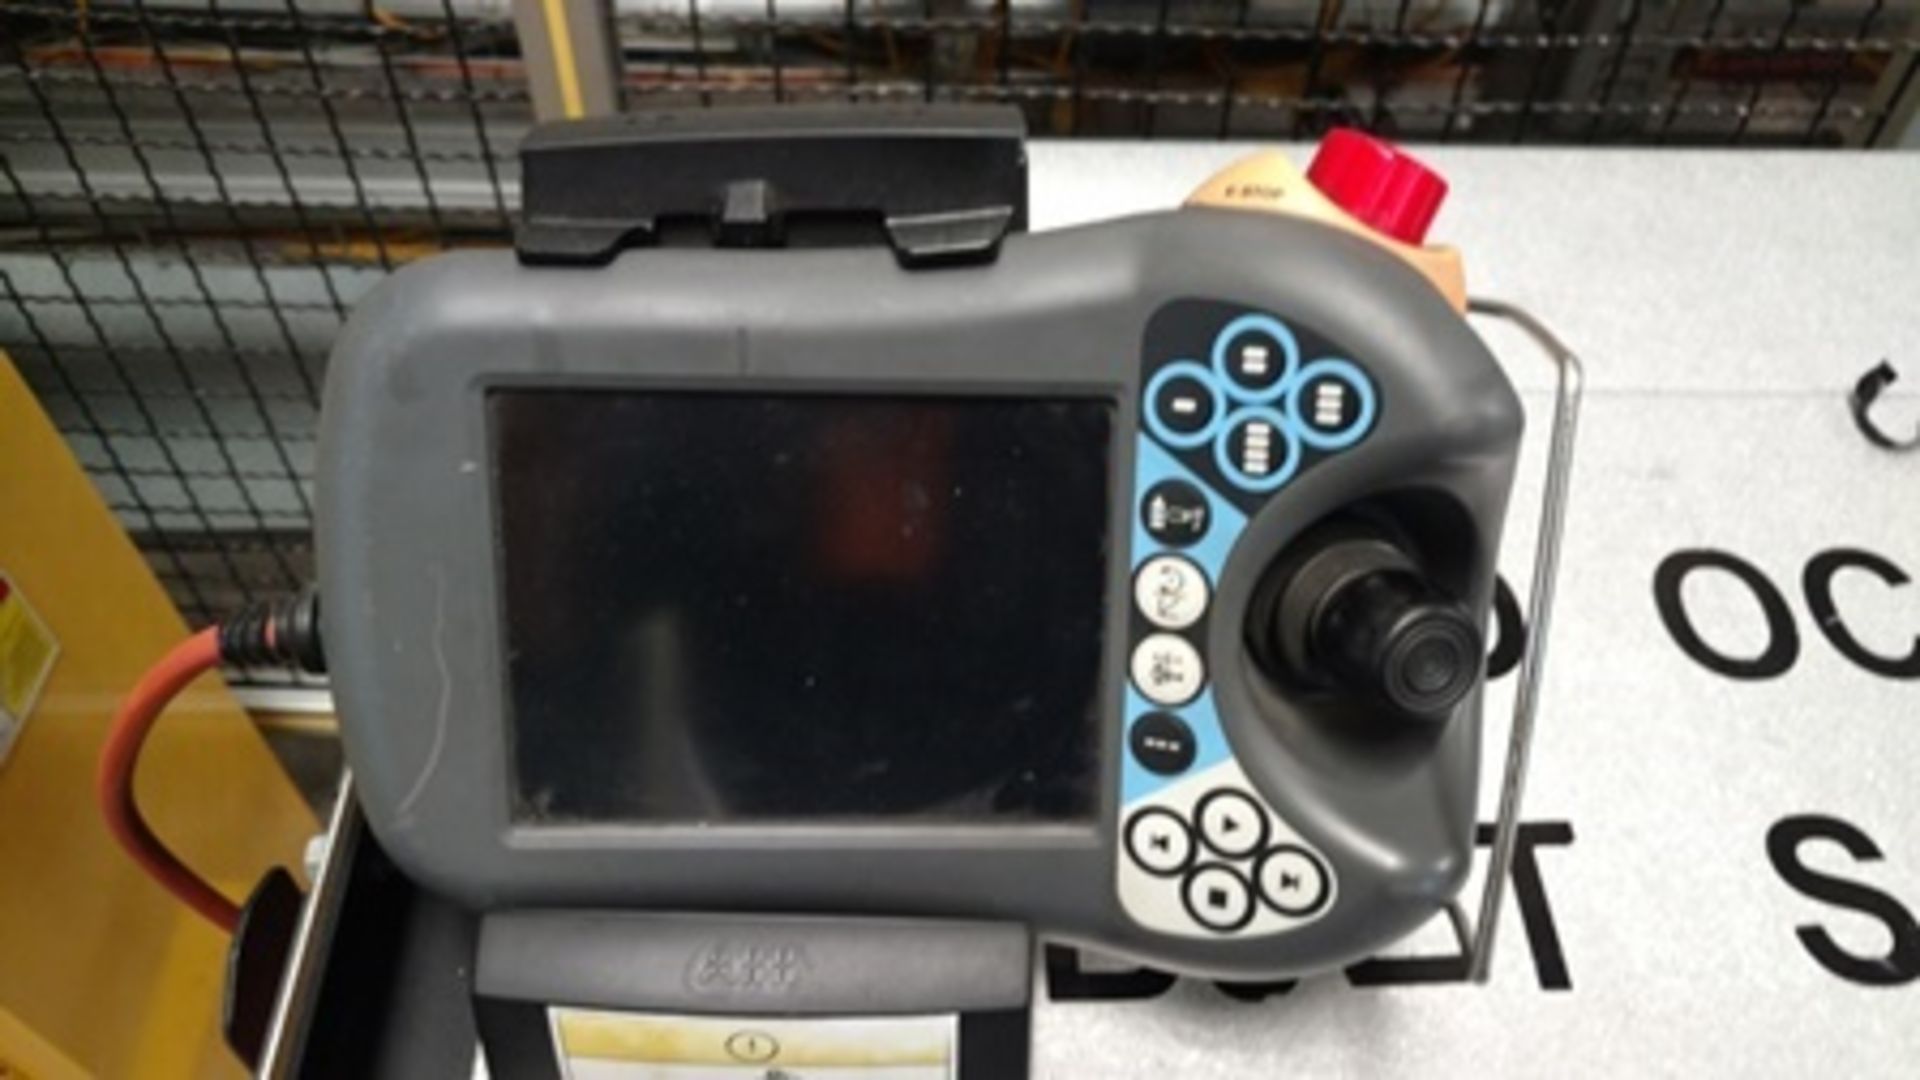 ABB Robot [Op 200], Series 6620-100280 with controller, teach pendant unit, grippers, pneu… - Image 2 of 16